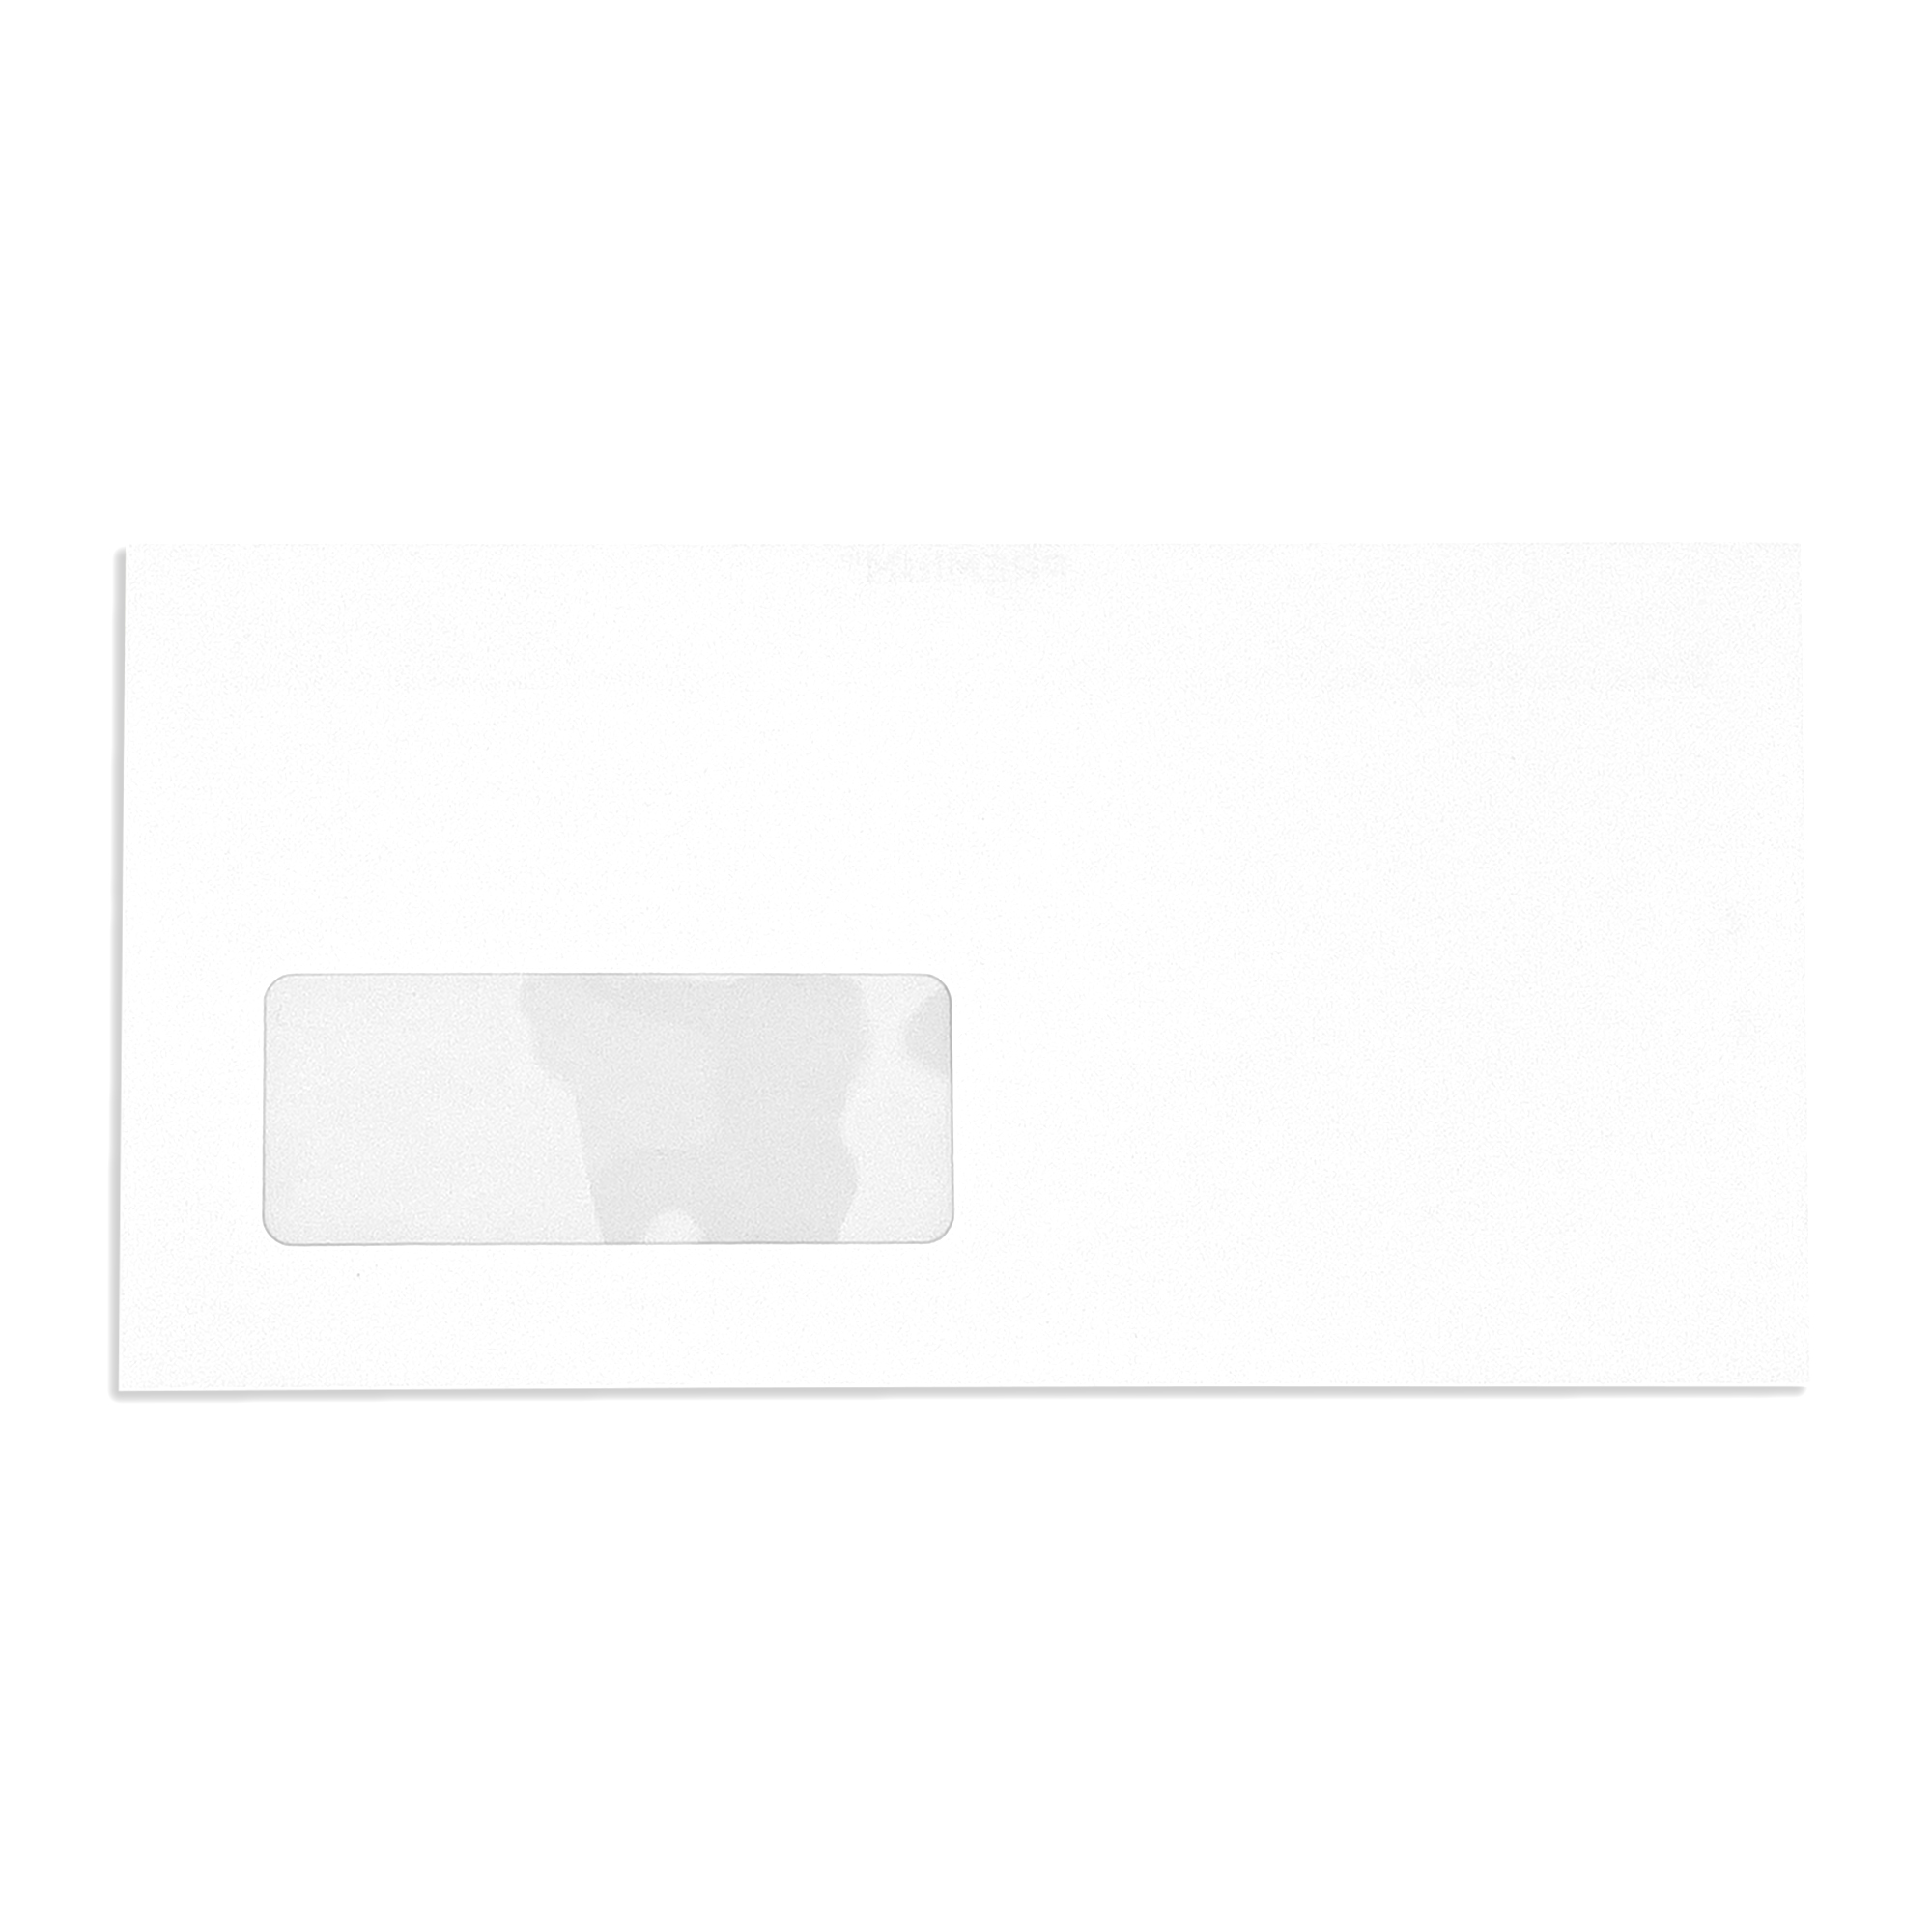 DL-window-high-white-120gsm-wallet-envelopes-front